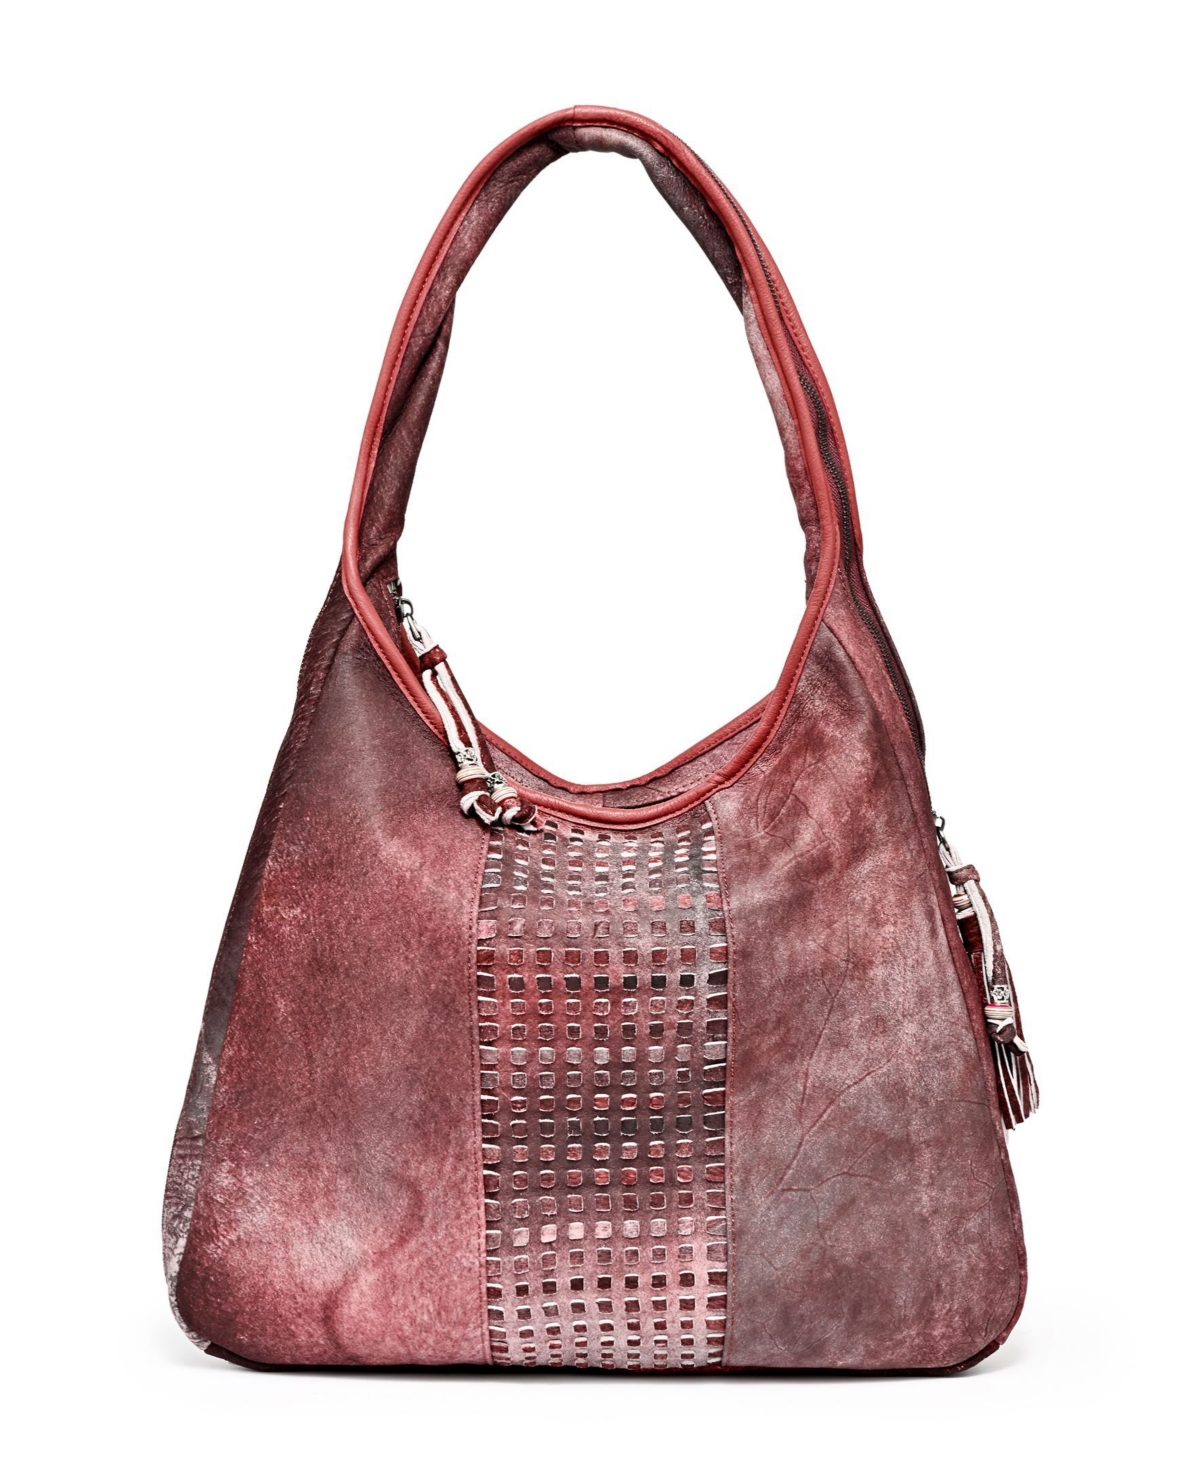 Women's Genuine Leather Dorado Expandable Hobo Bag - Tan